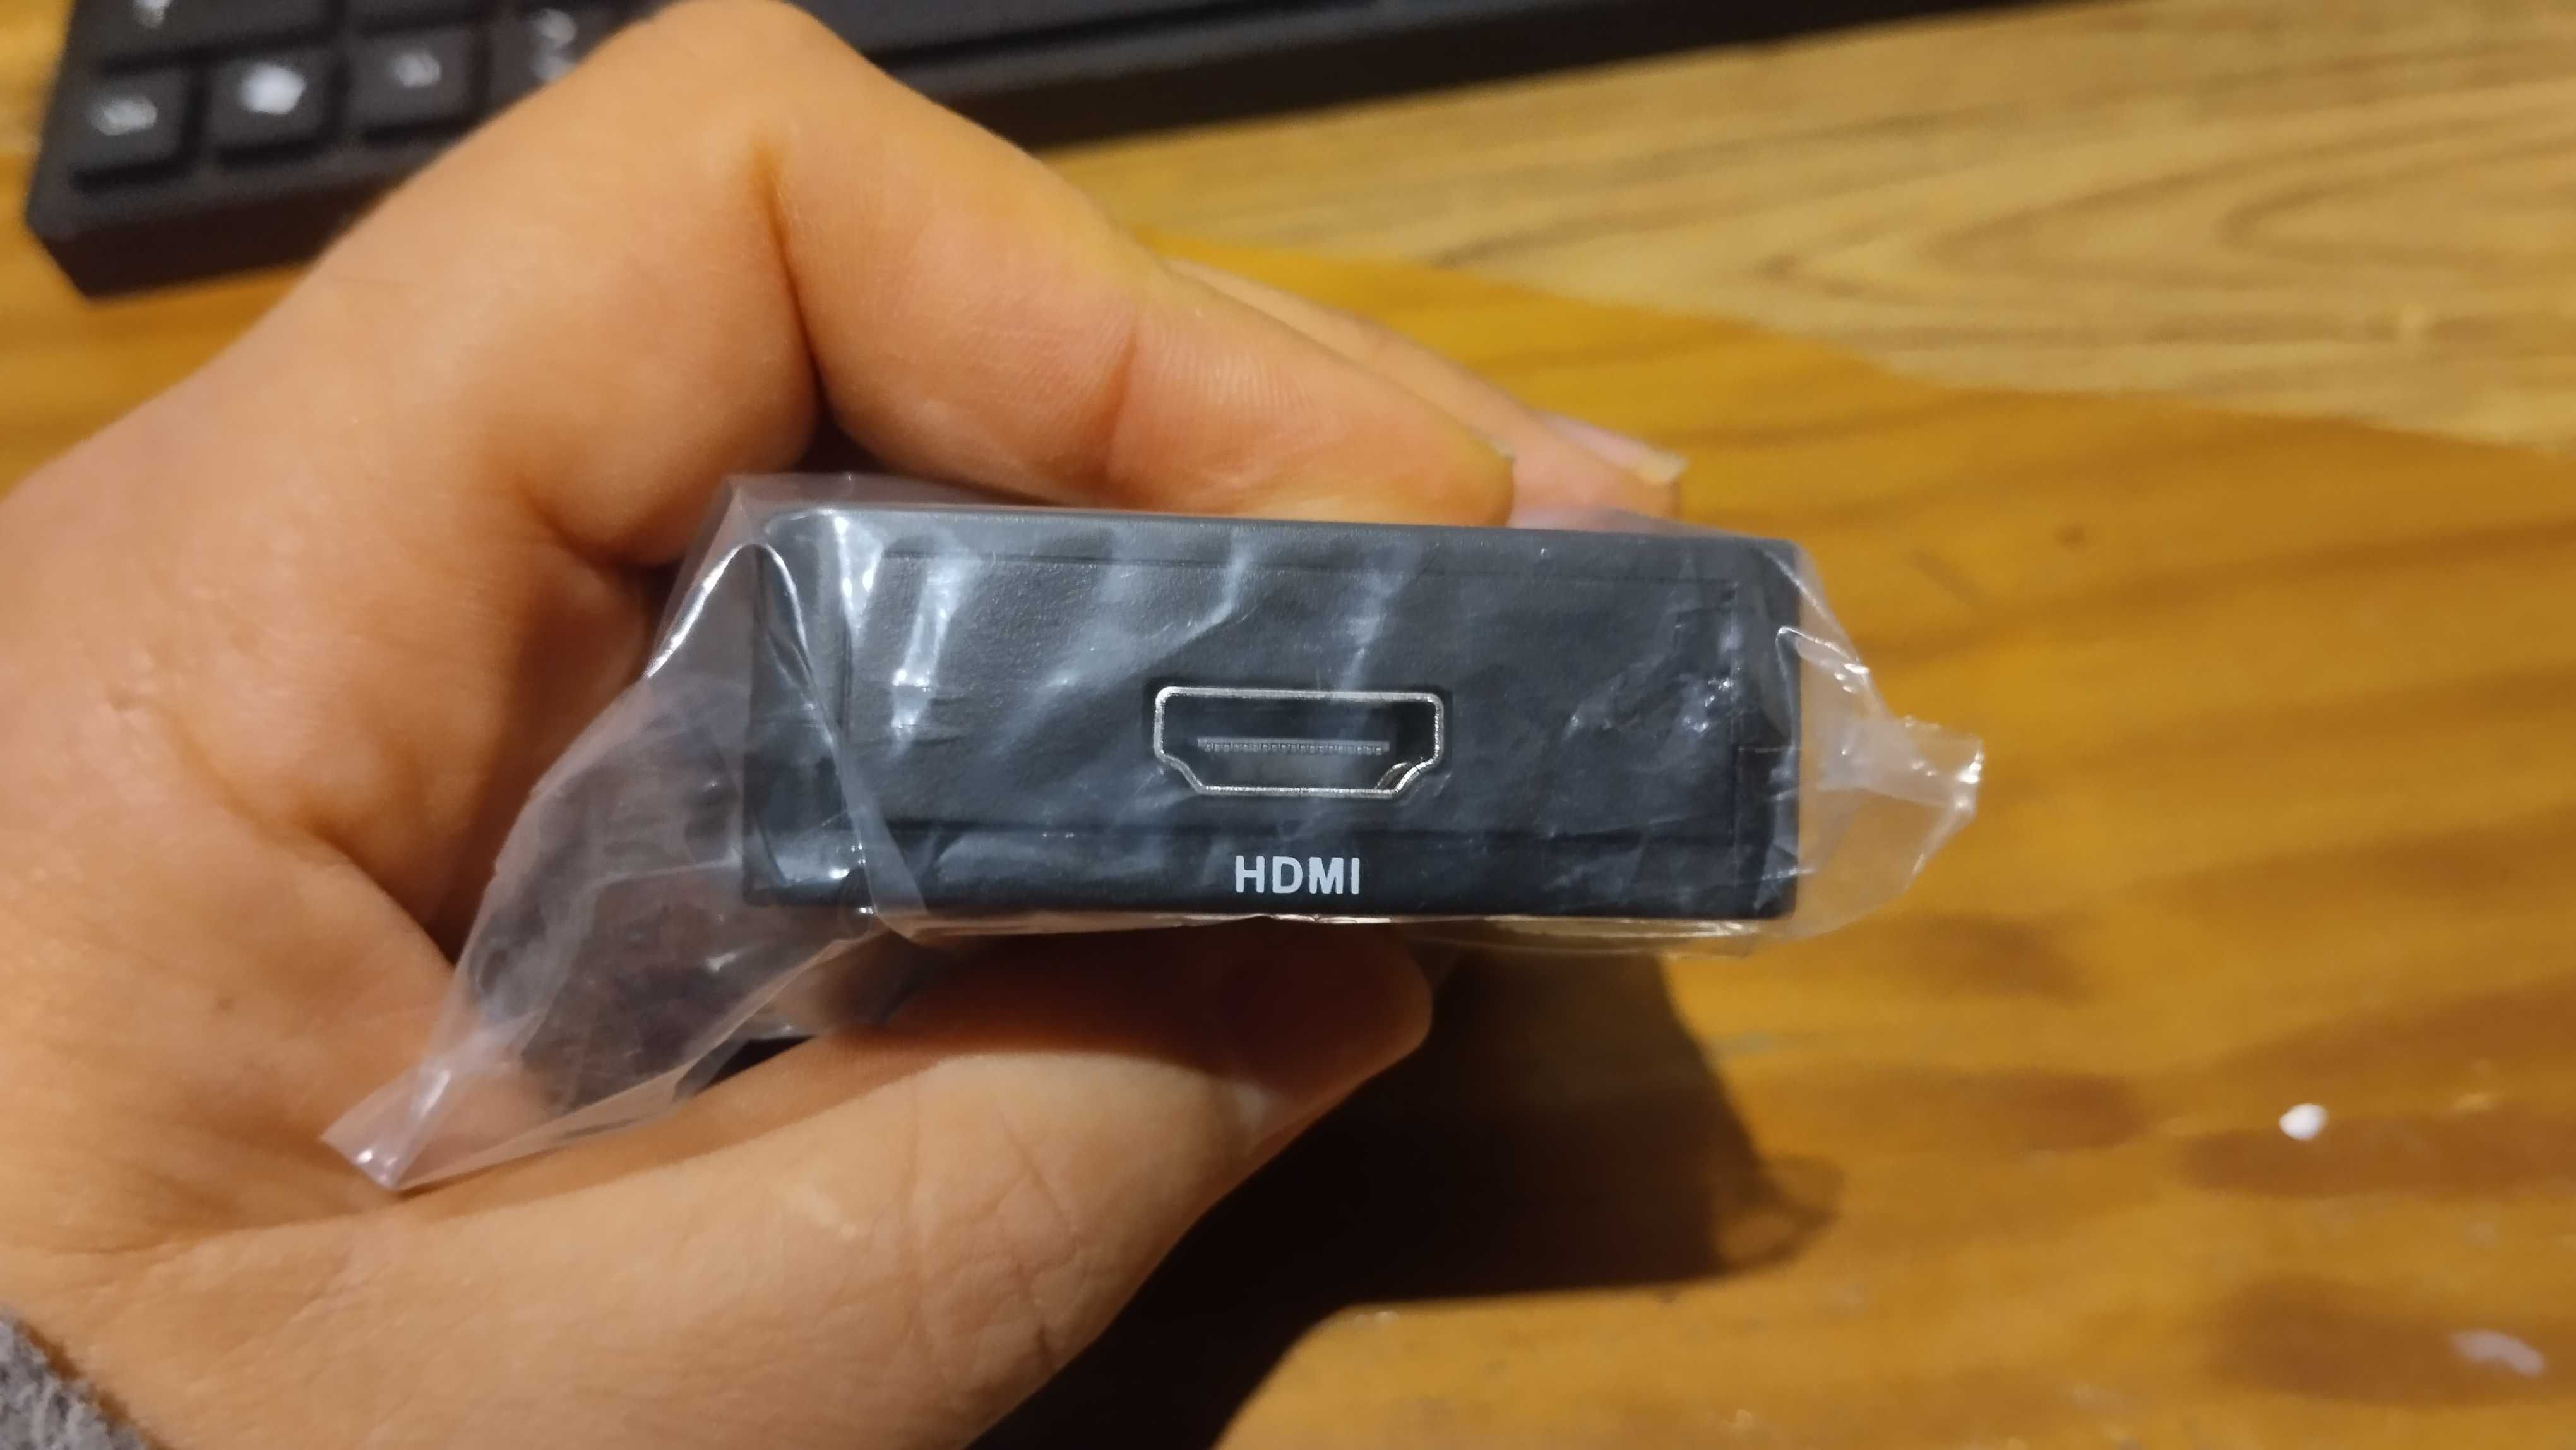 Conversor HDMI to AV - Novo e Lacrado.